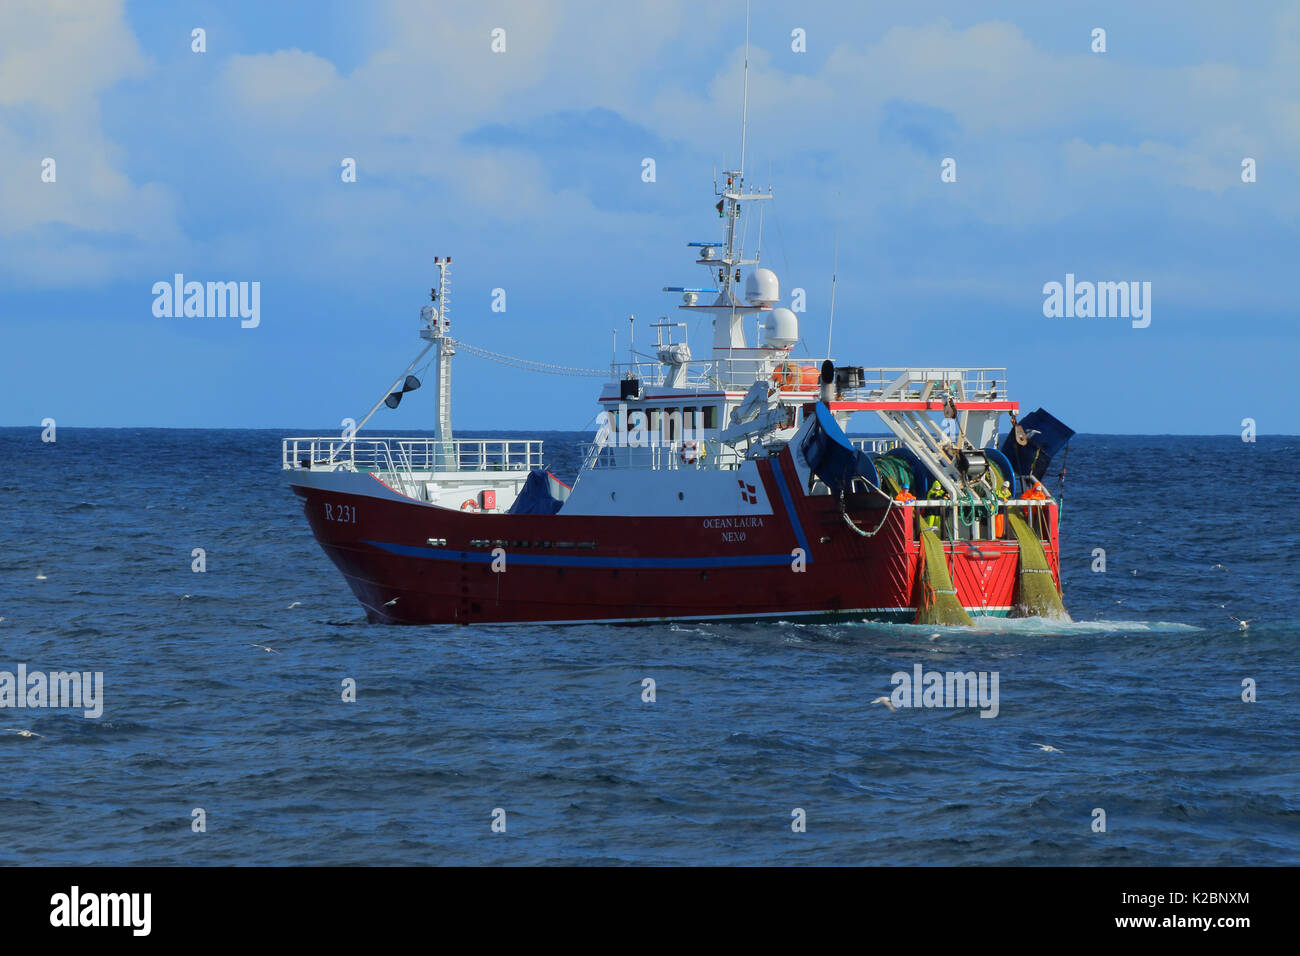 Danish trawler 'Ocean Laura' operating on the North Sea, September 2015. Stock Photo